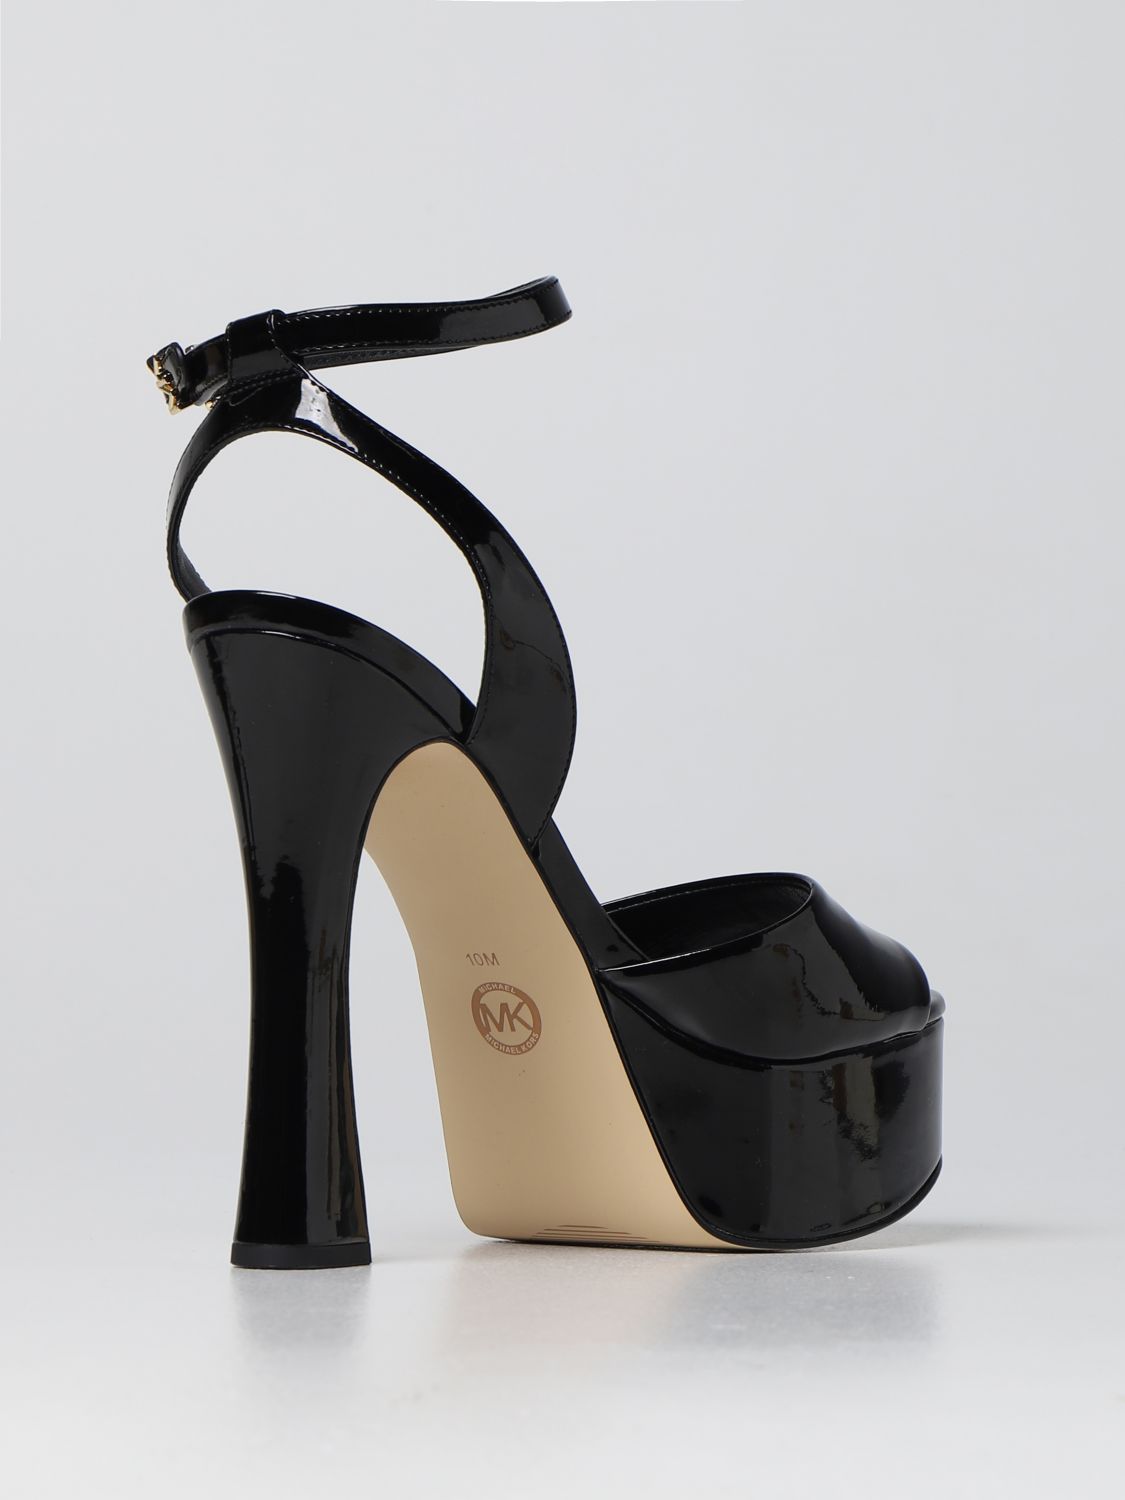 Michael Kors Outlet: Jenson Platform Michael sandals in patent leather -  Black | Michael Kors heeled sandals 40T2JSHS1A online on 